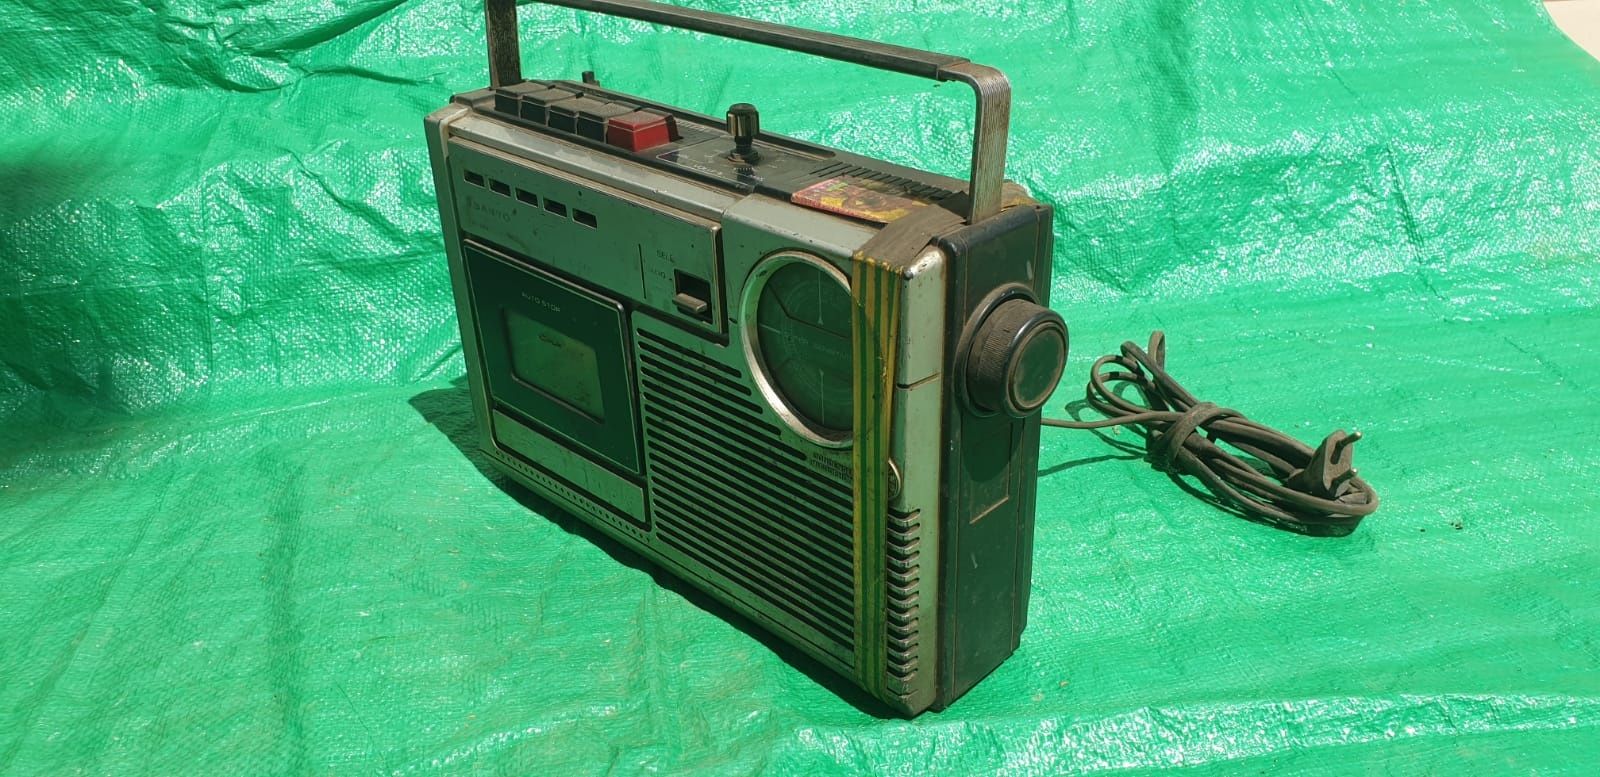 Radiocasetofon Sanyo vechi  AM ,FM 2Band M2402-LE an 1978

Sanyo Elect